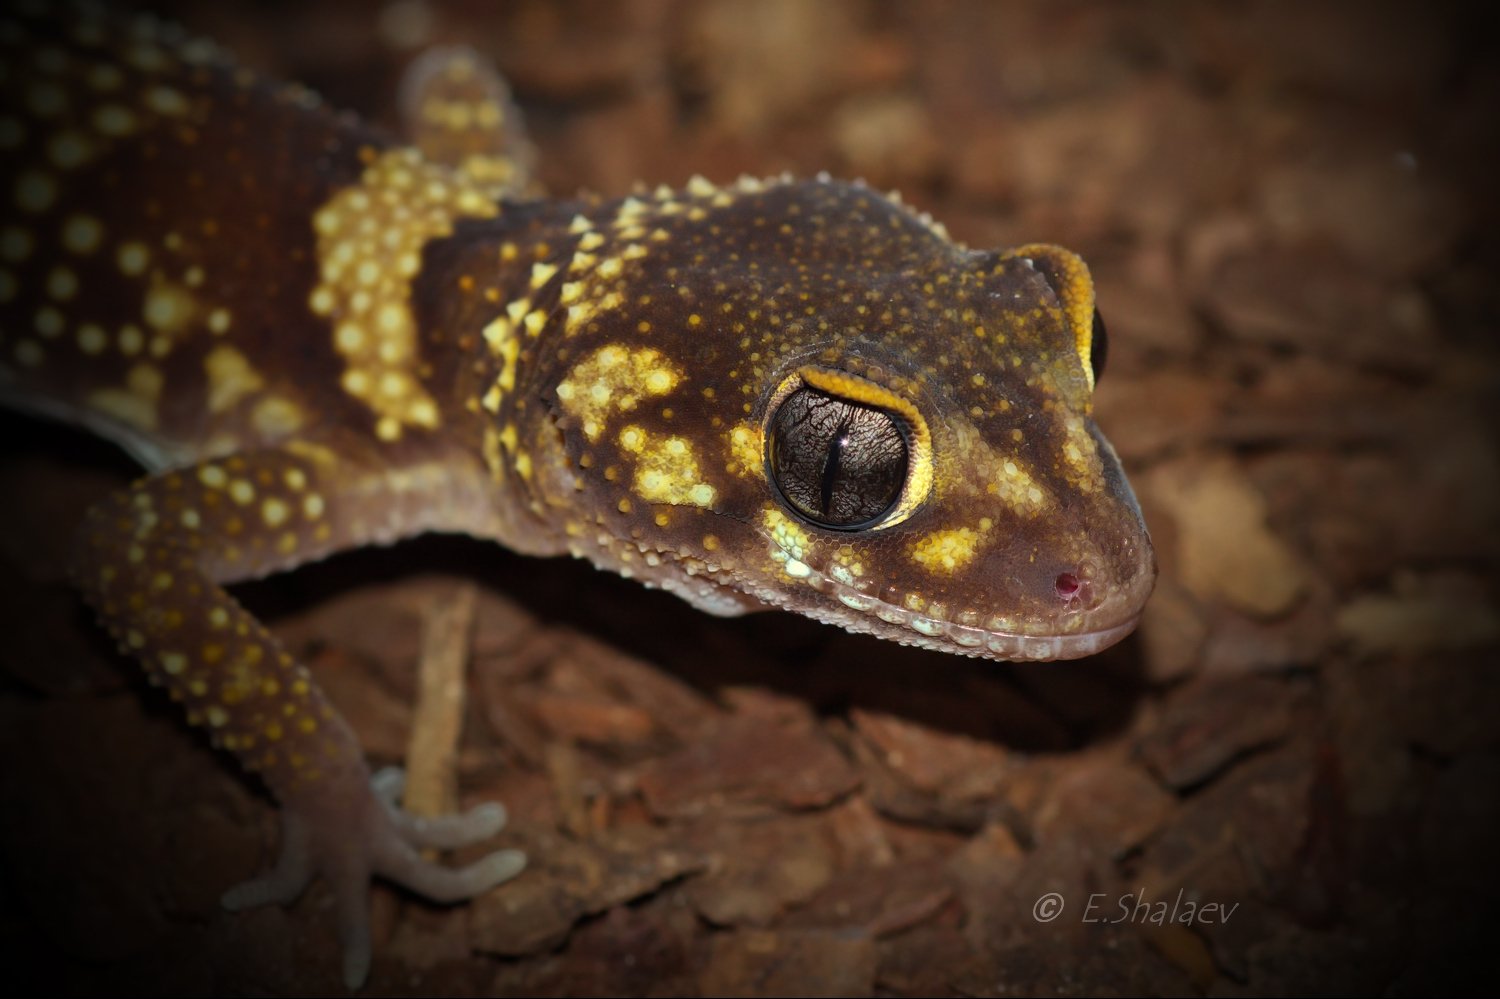 thick-tailed gecko, underwoodisaurus mili, австралийский толстохвостый гекк, геккон, рептилии, ящерица, Евгений